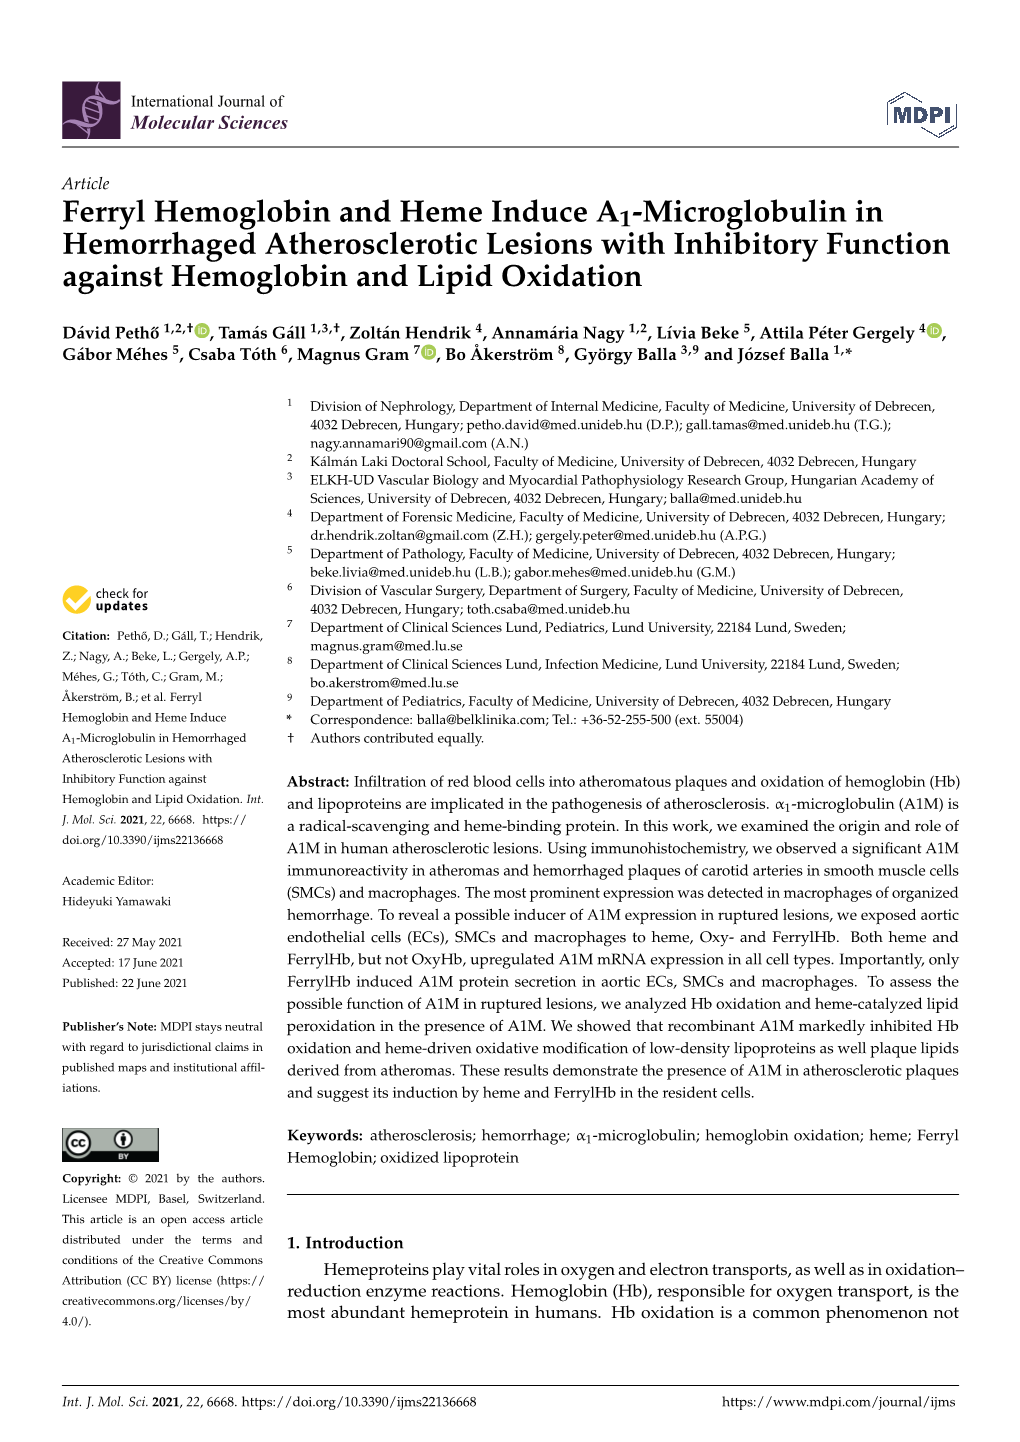 Ferryl Hemoglobin and Heme Induce A1-Microglobulin in Hemorrhaged Atherosclerotic Lesions with Inhibitory Function Against Hemoglobin and Lipid Oxidation